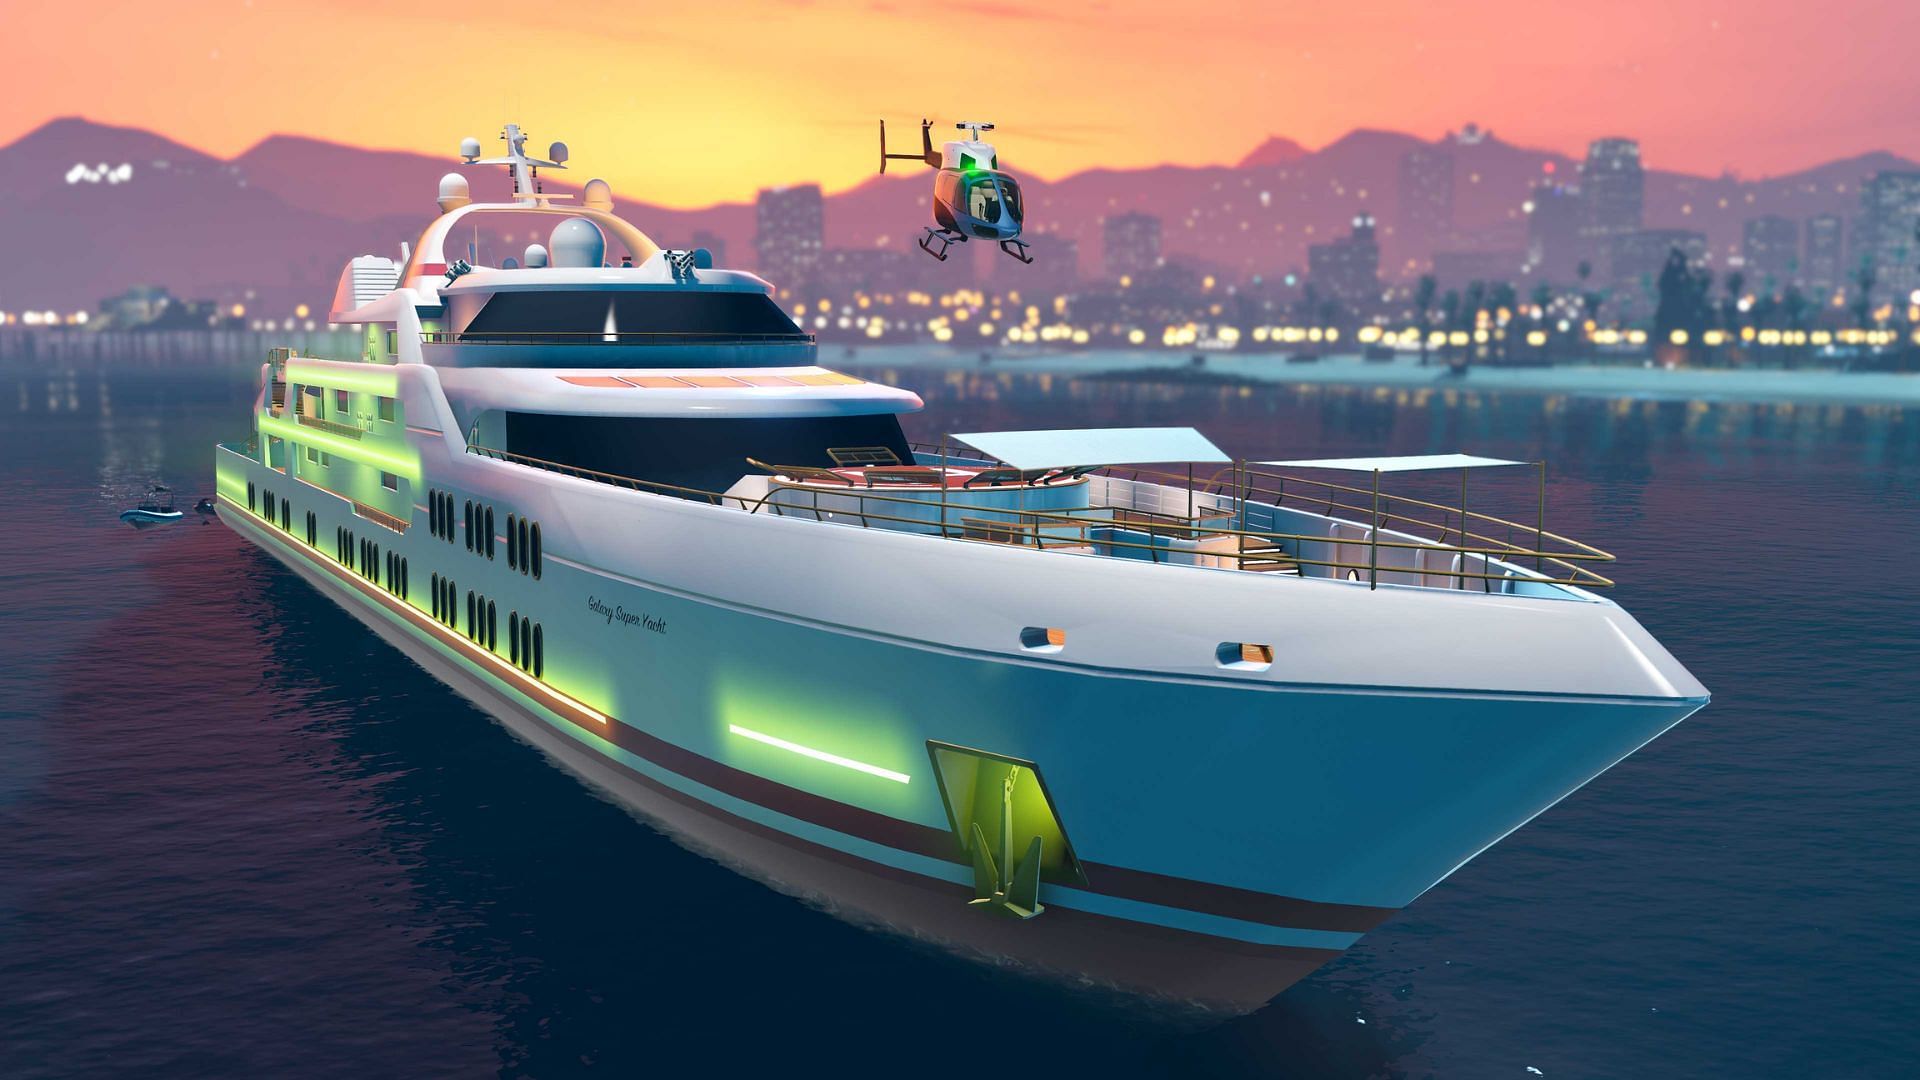 gta 5 online yacht names